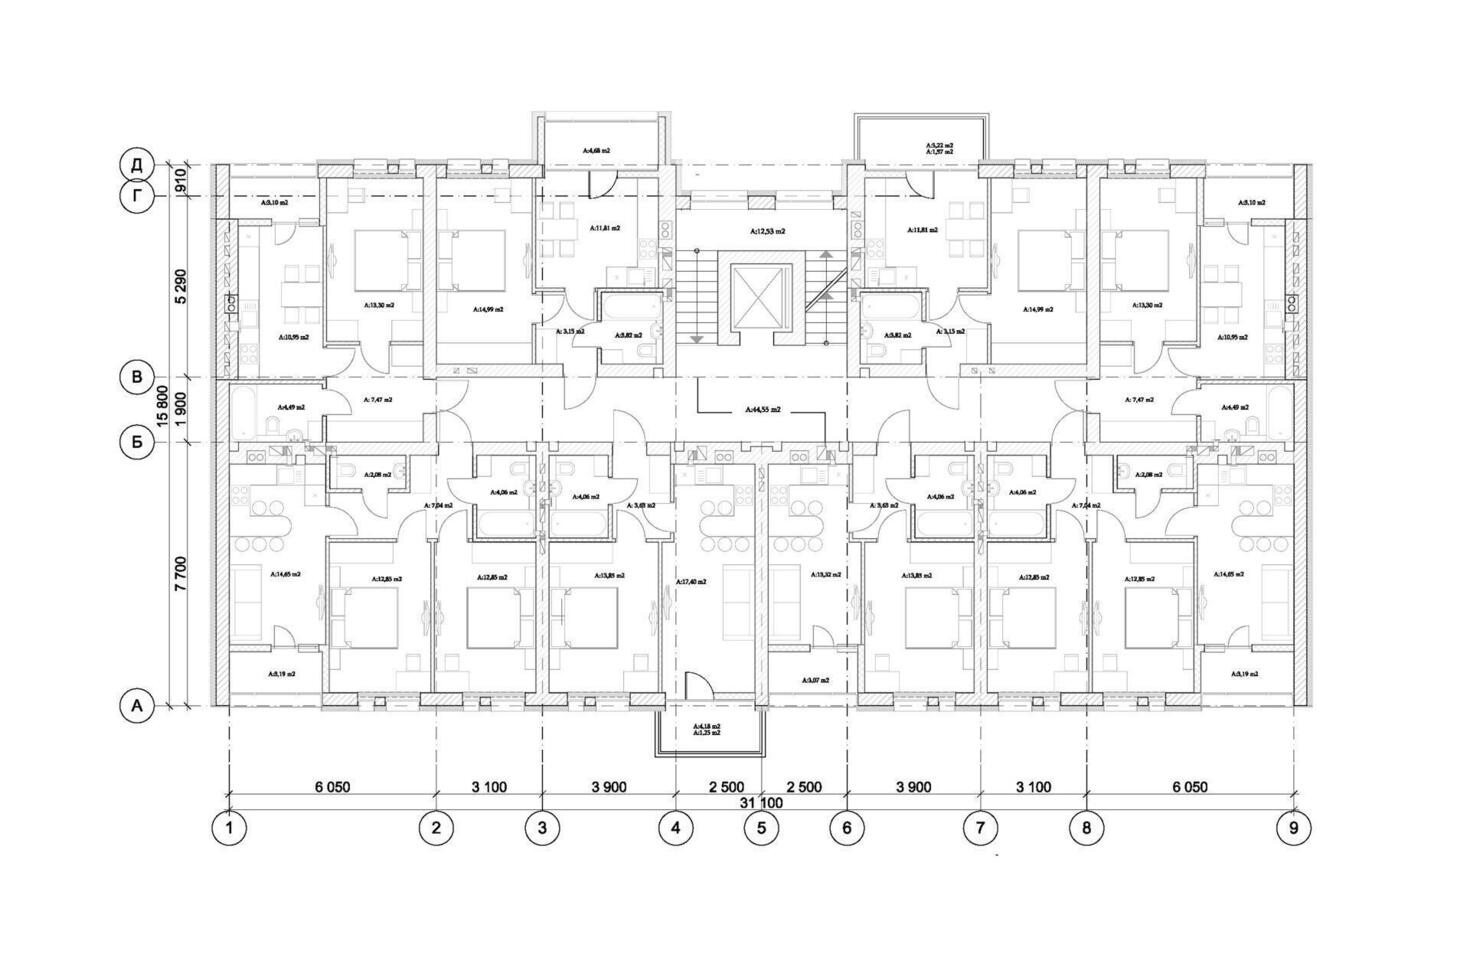 arquitectónico piso plan, Departamento disposición, Plano. vector ilustración